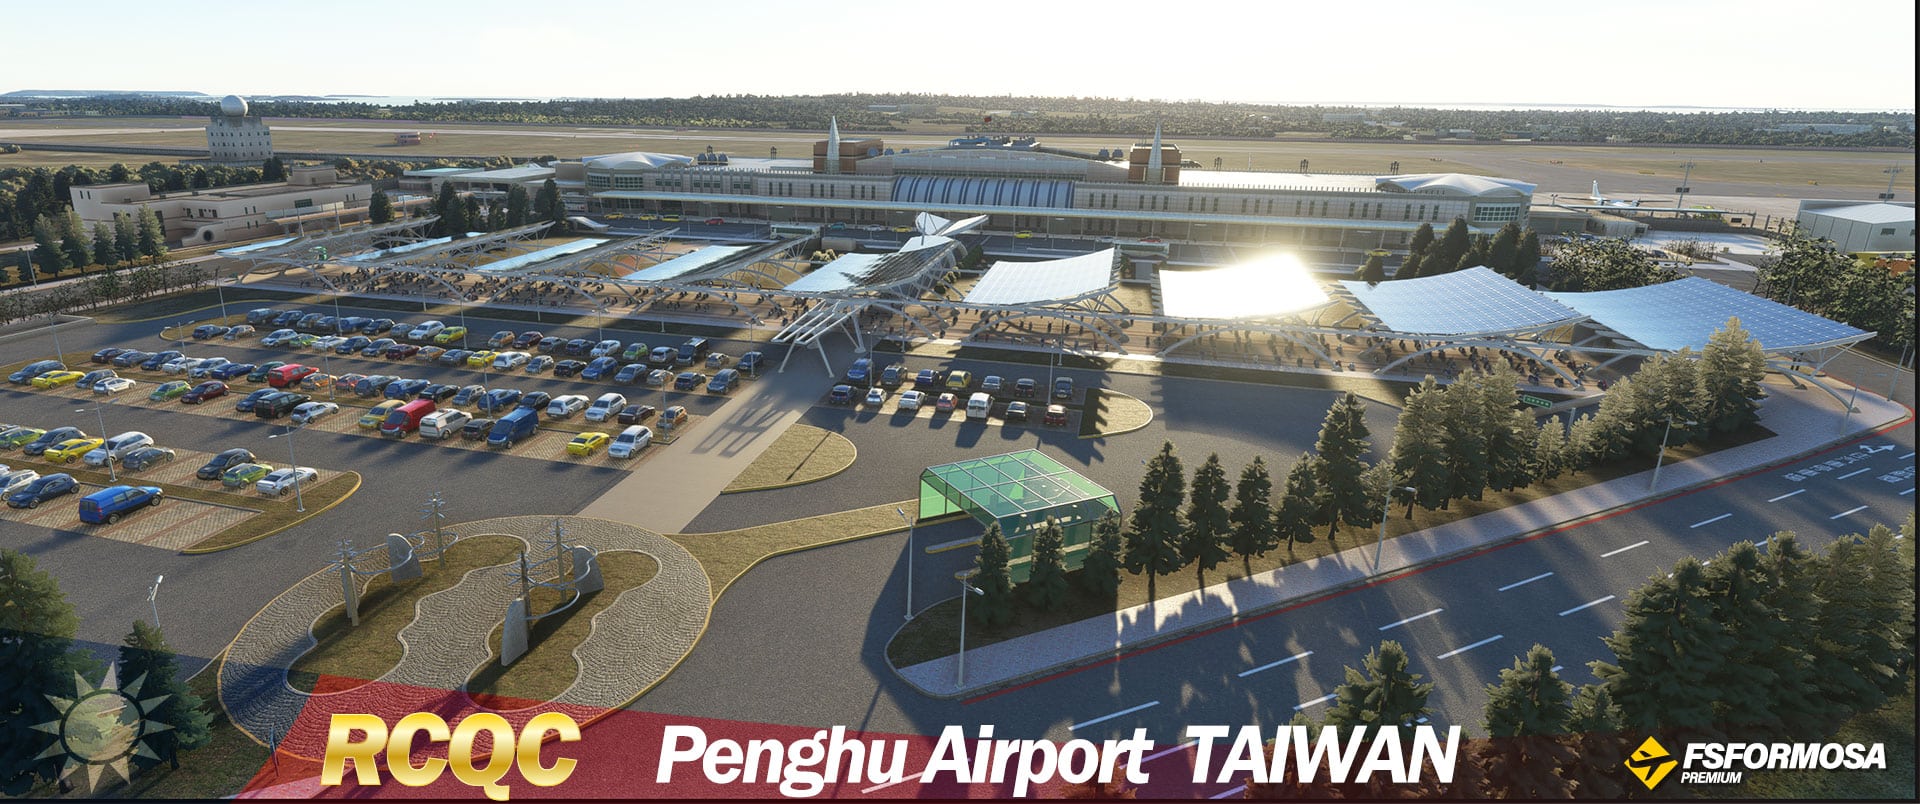 FSformosa – RCQC Penghu Airport Taiwan MSFS – simFlight